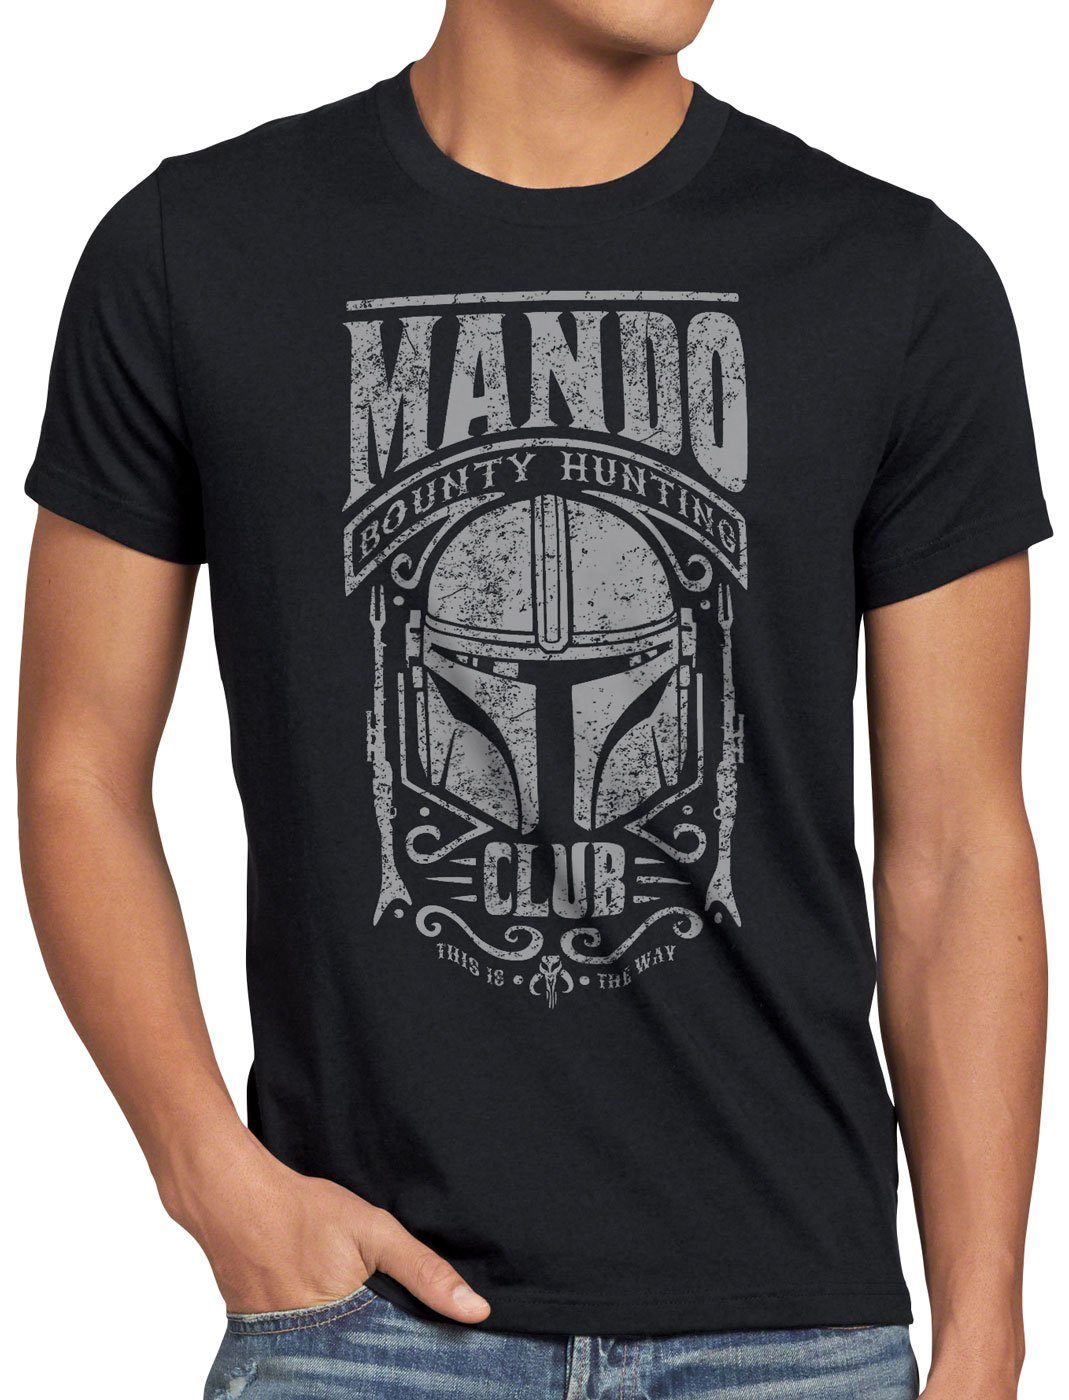 Print-Shirt hunter Herren baby Mando T-Shirt yoda schwarz style3 bounty